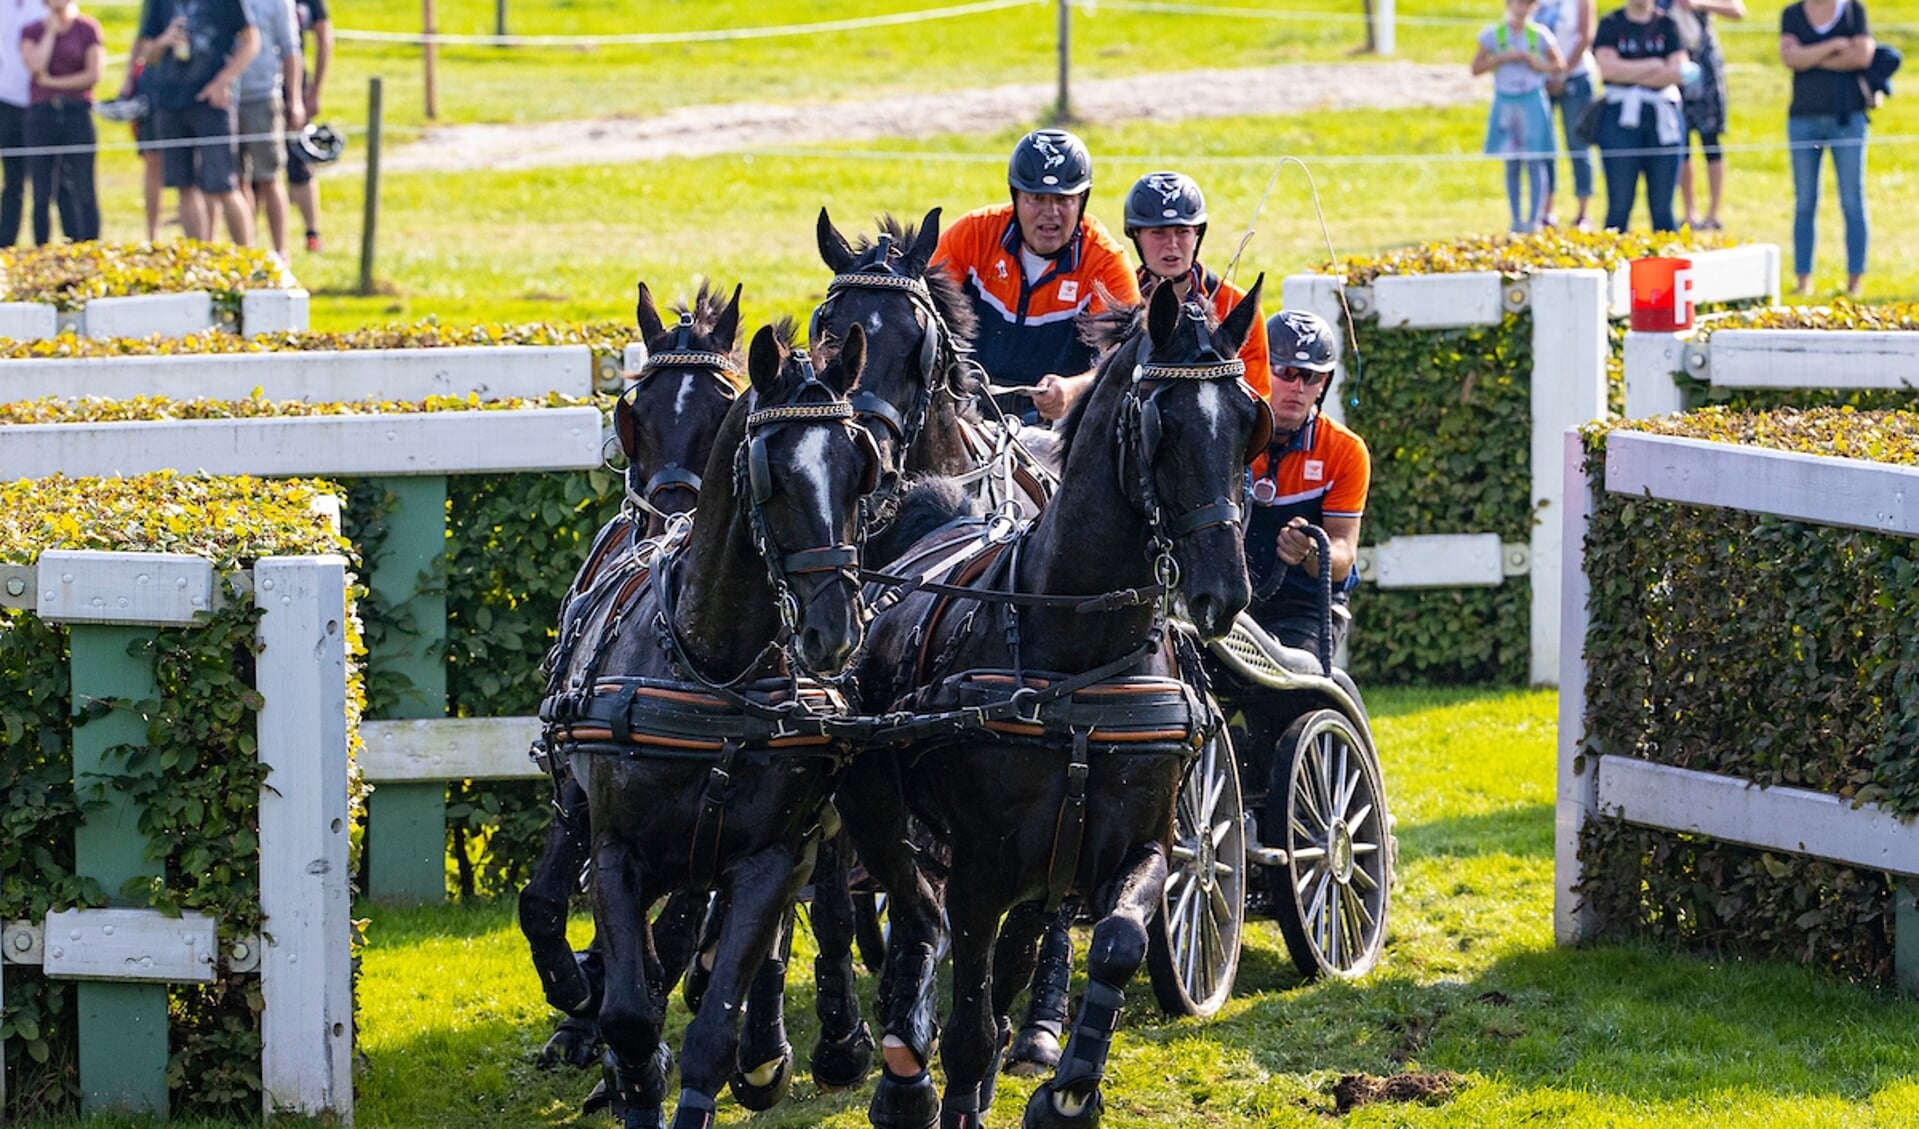 IJsbrand Chardon
World Equestrian Festival CHIO Aachen 2021
© DigiShots